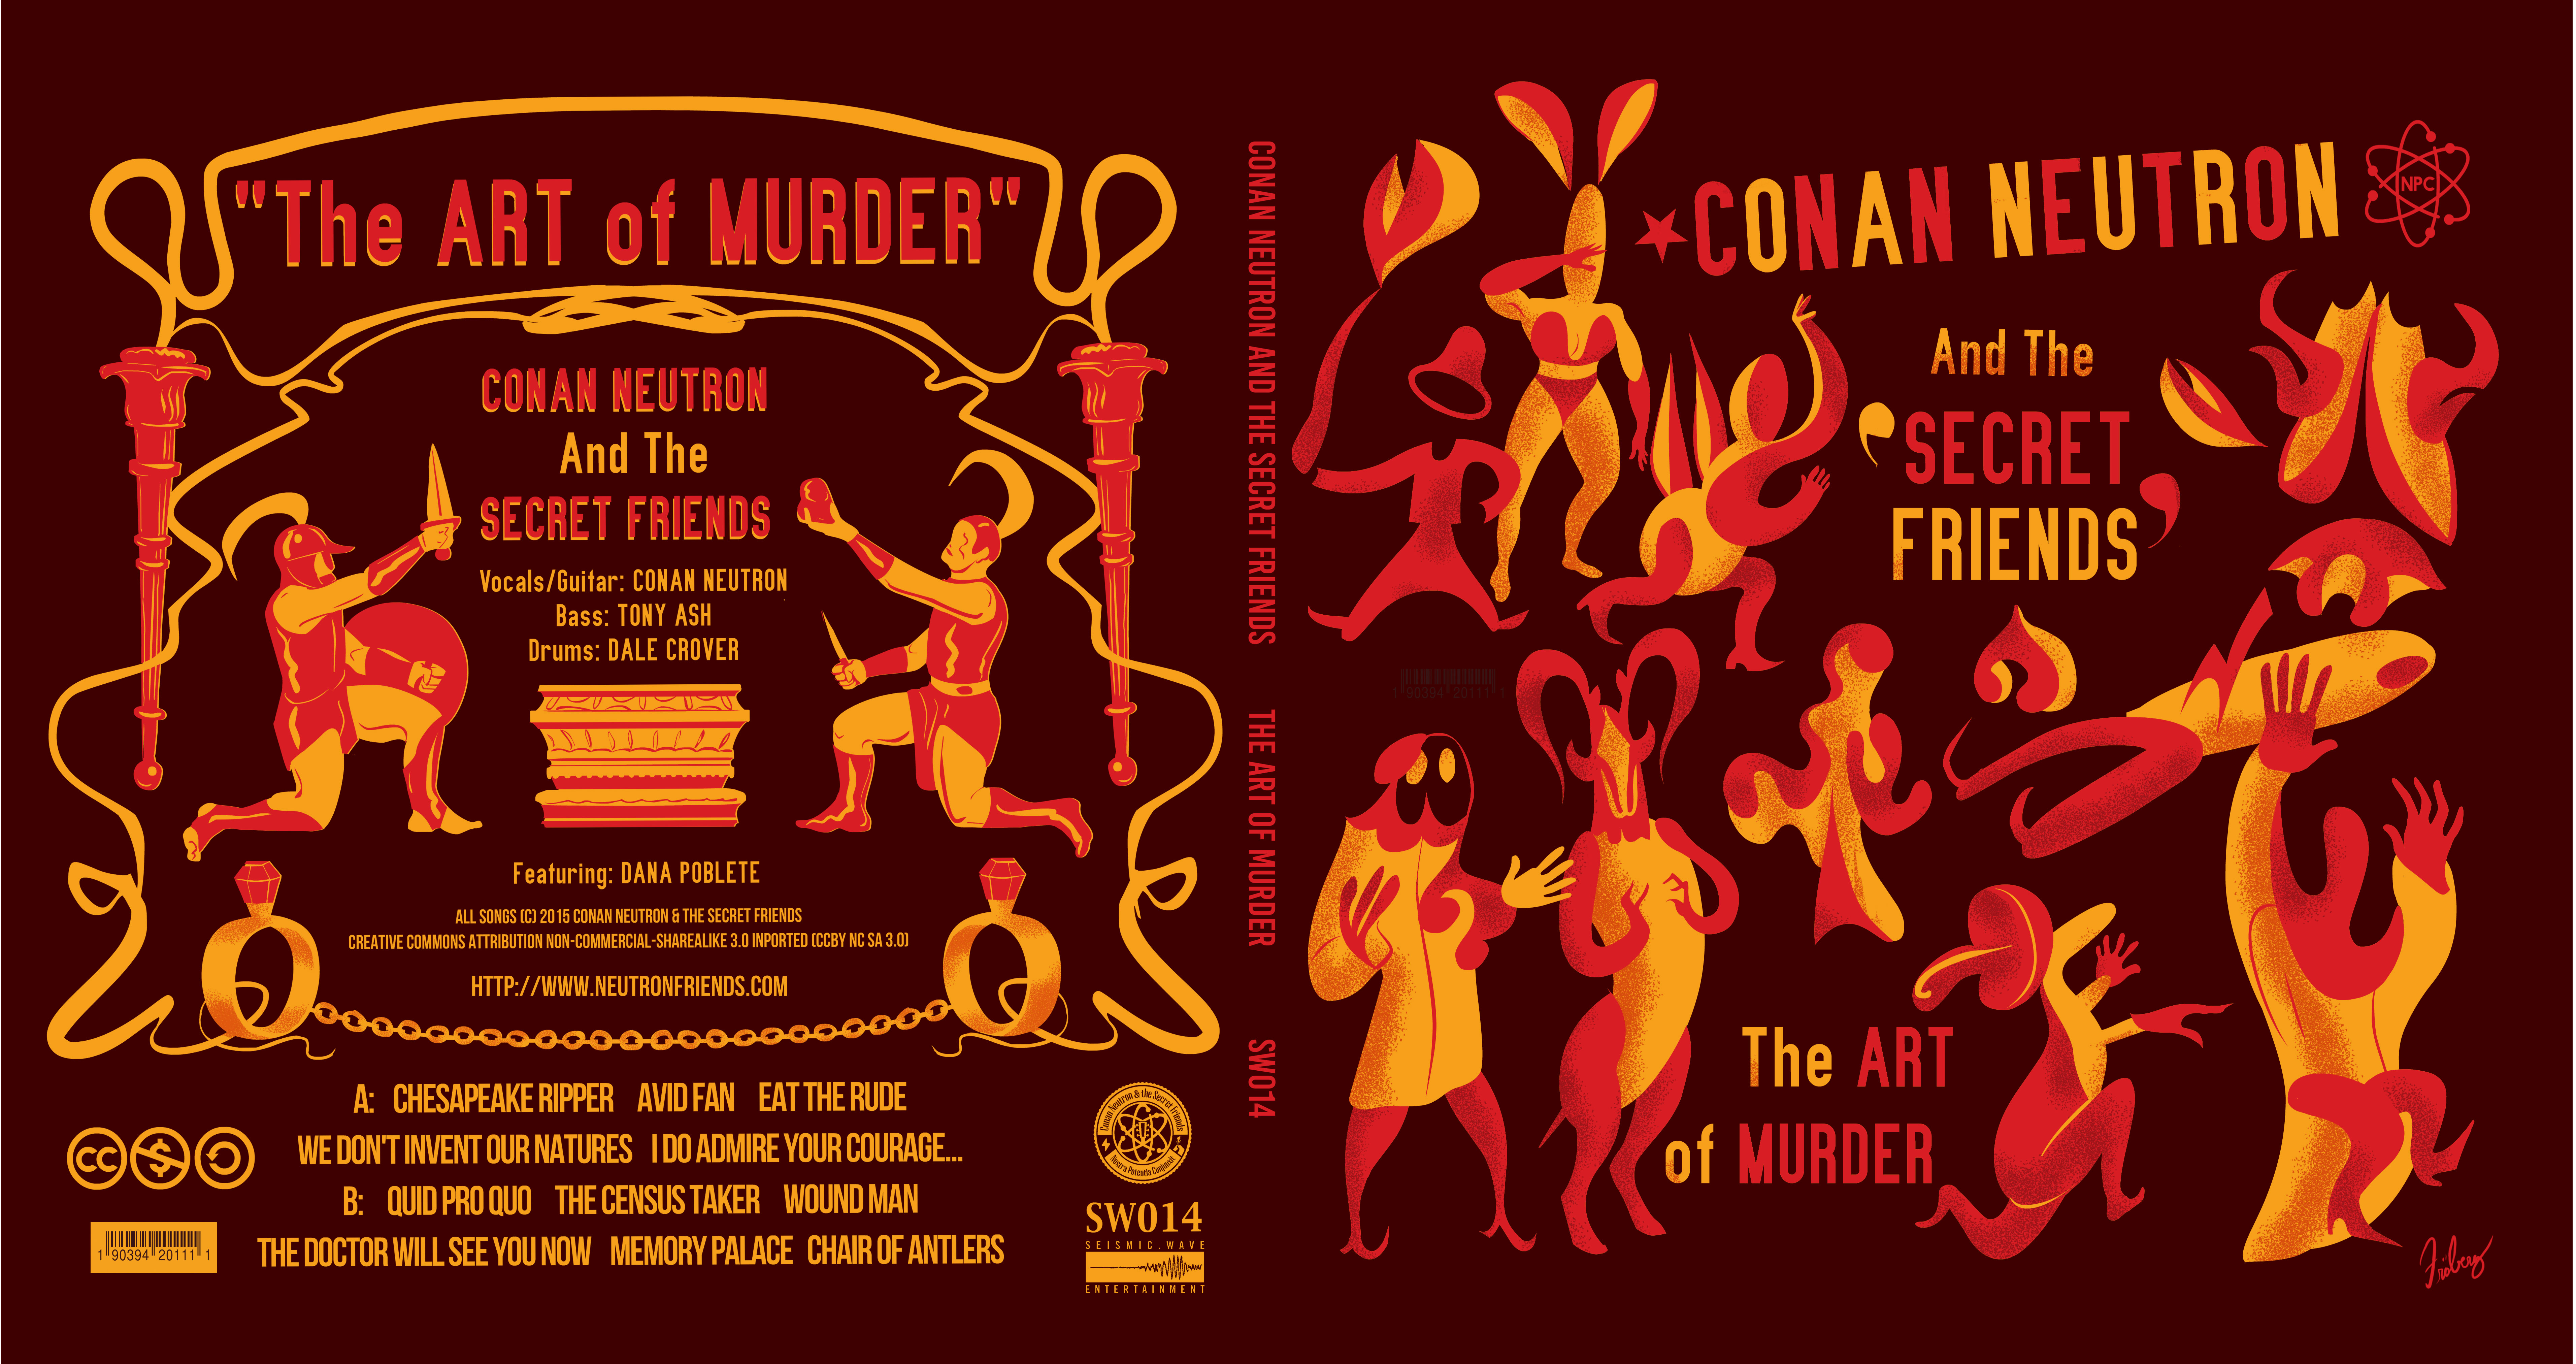 The Art of Murder - Art by Rick Forberg